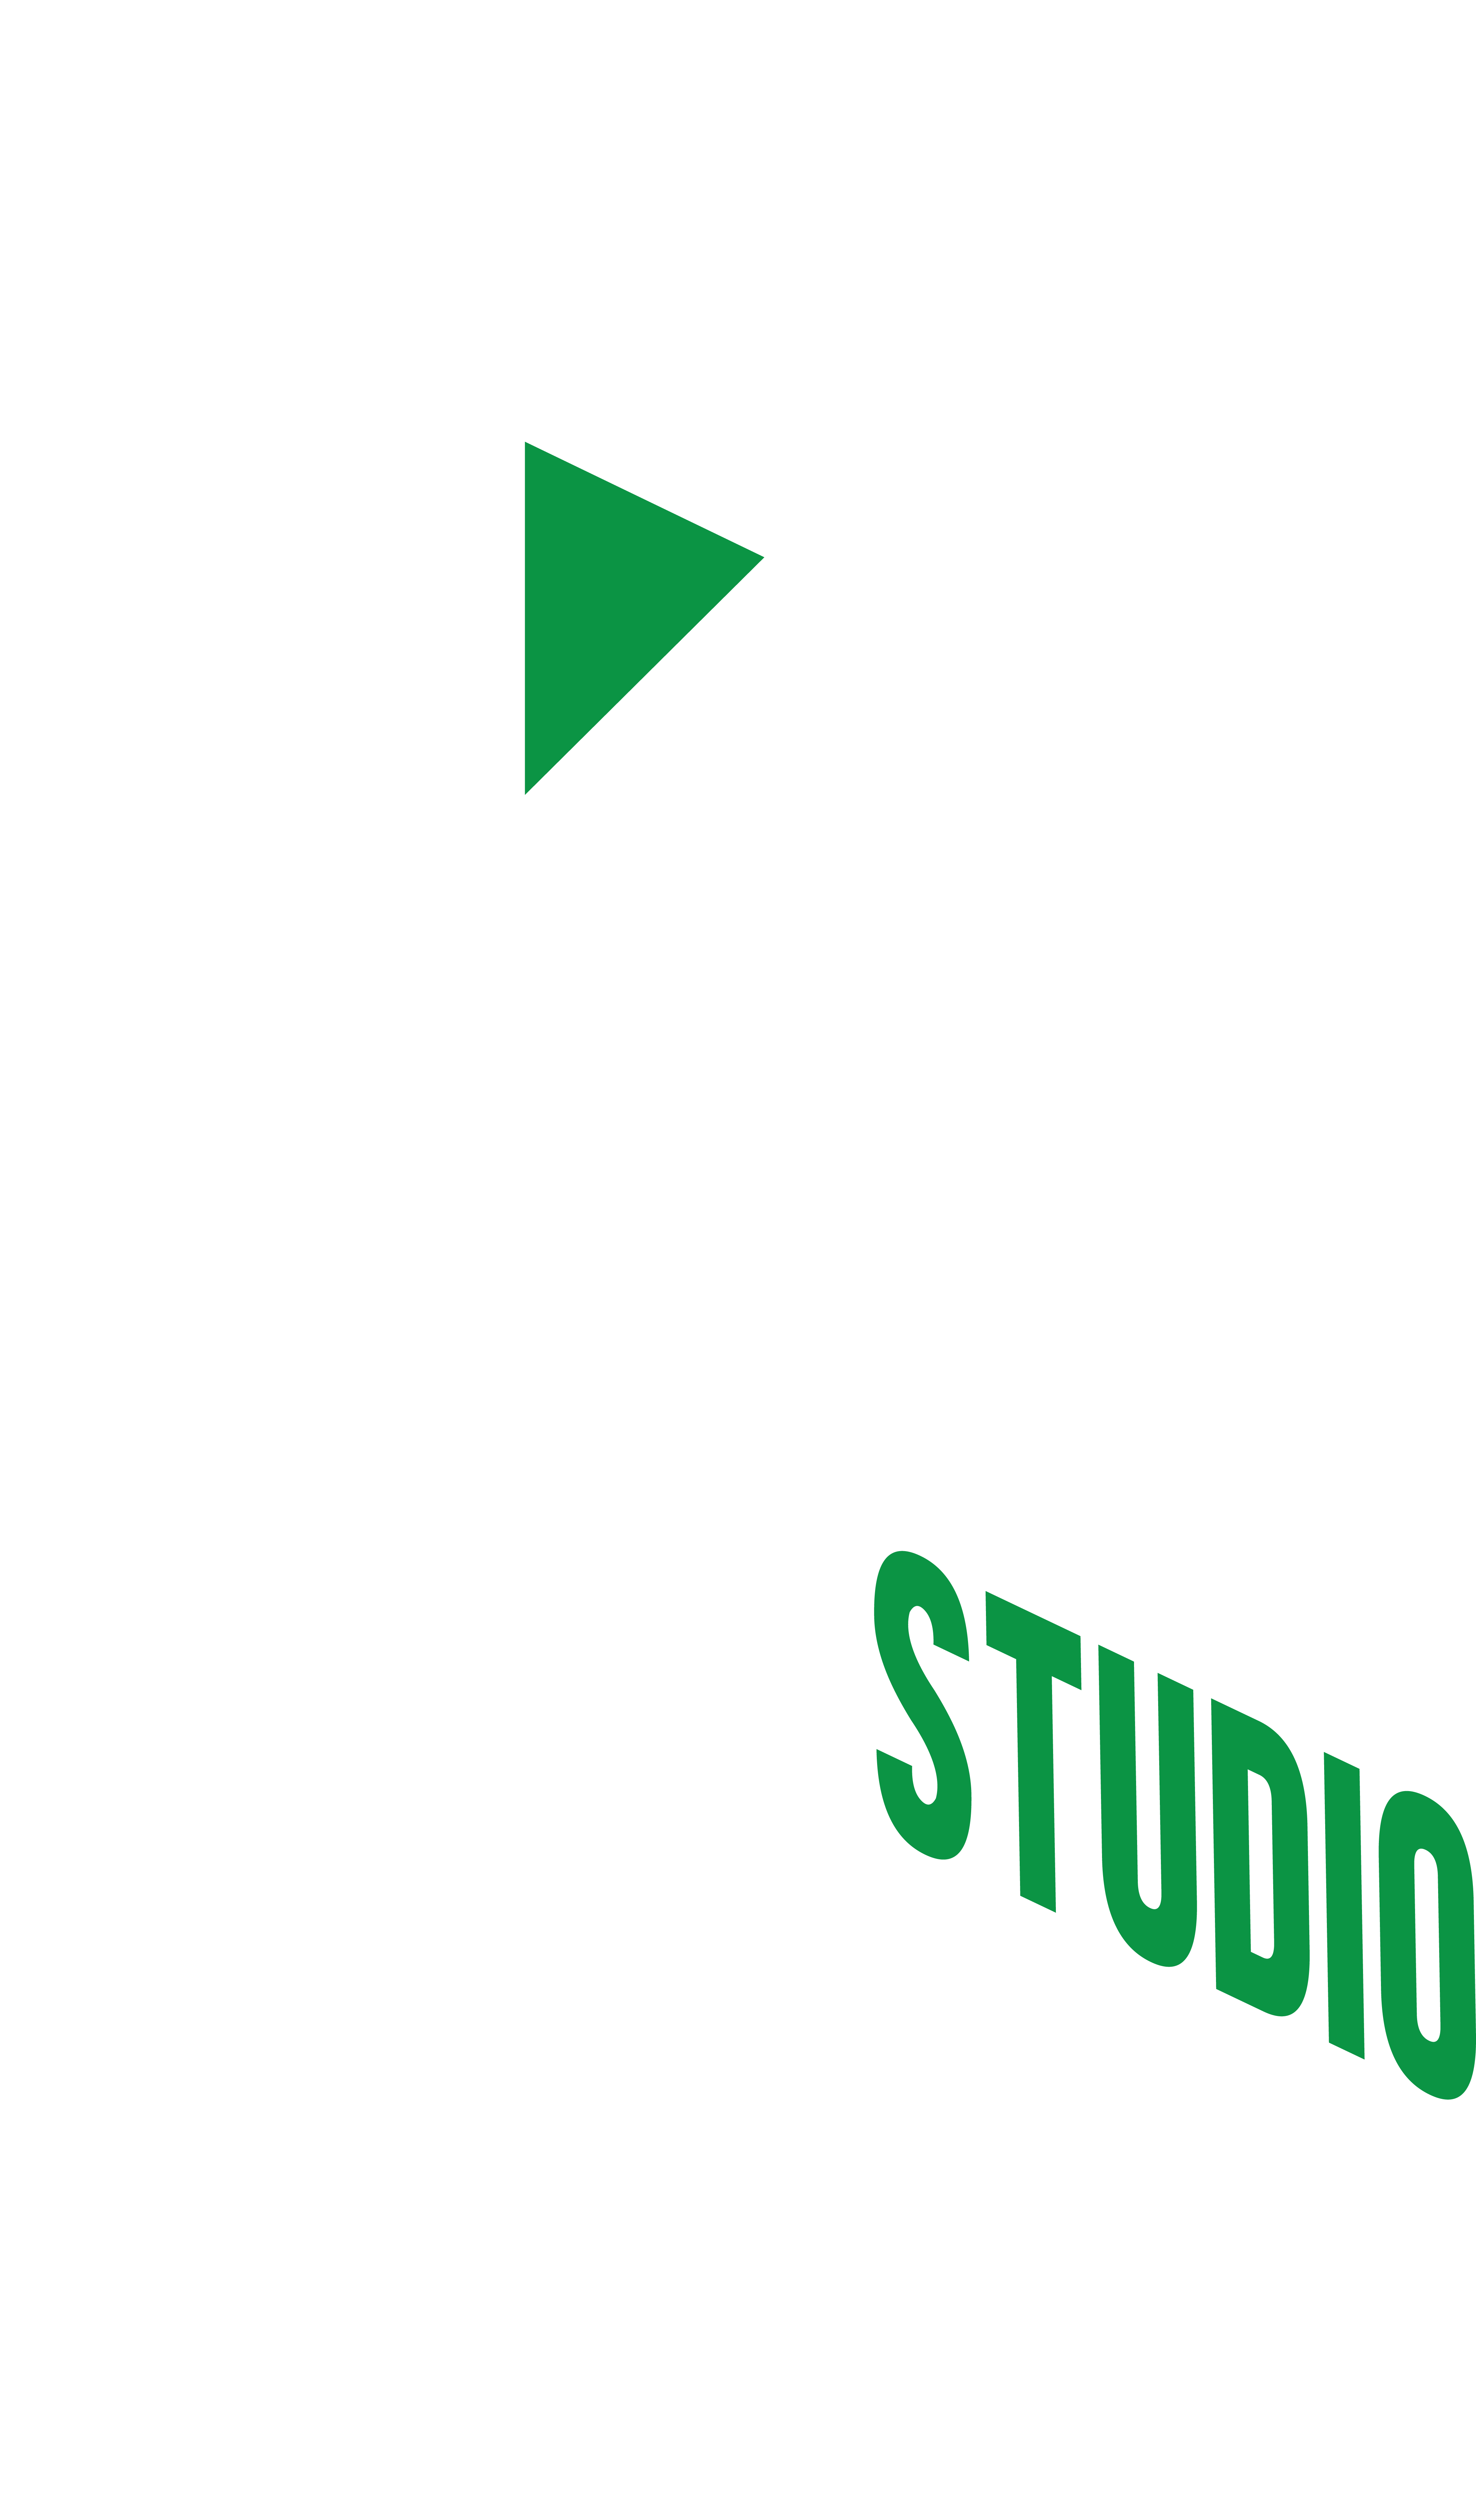 JR Studio